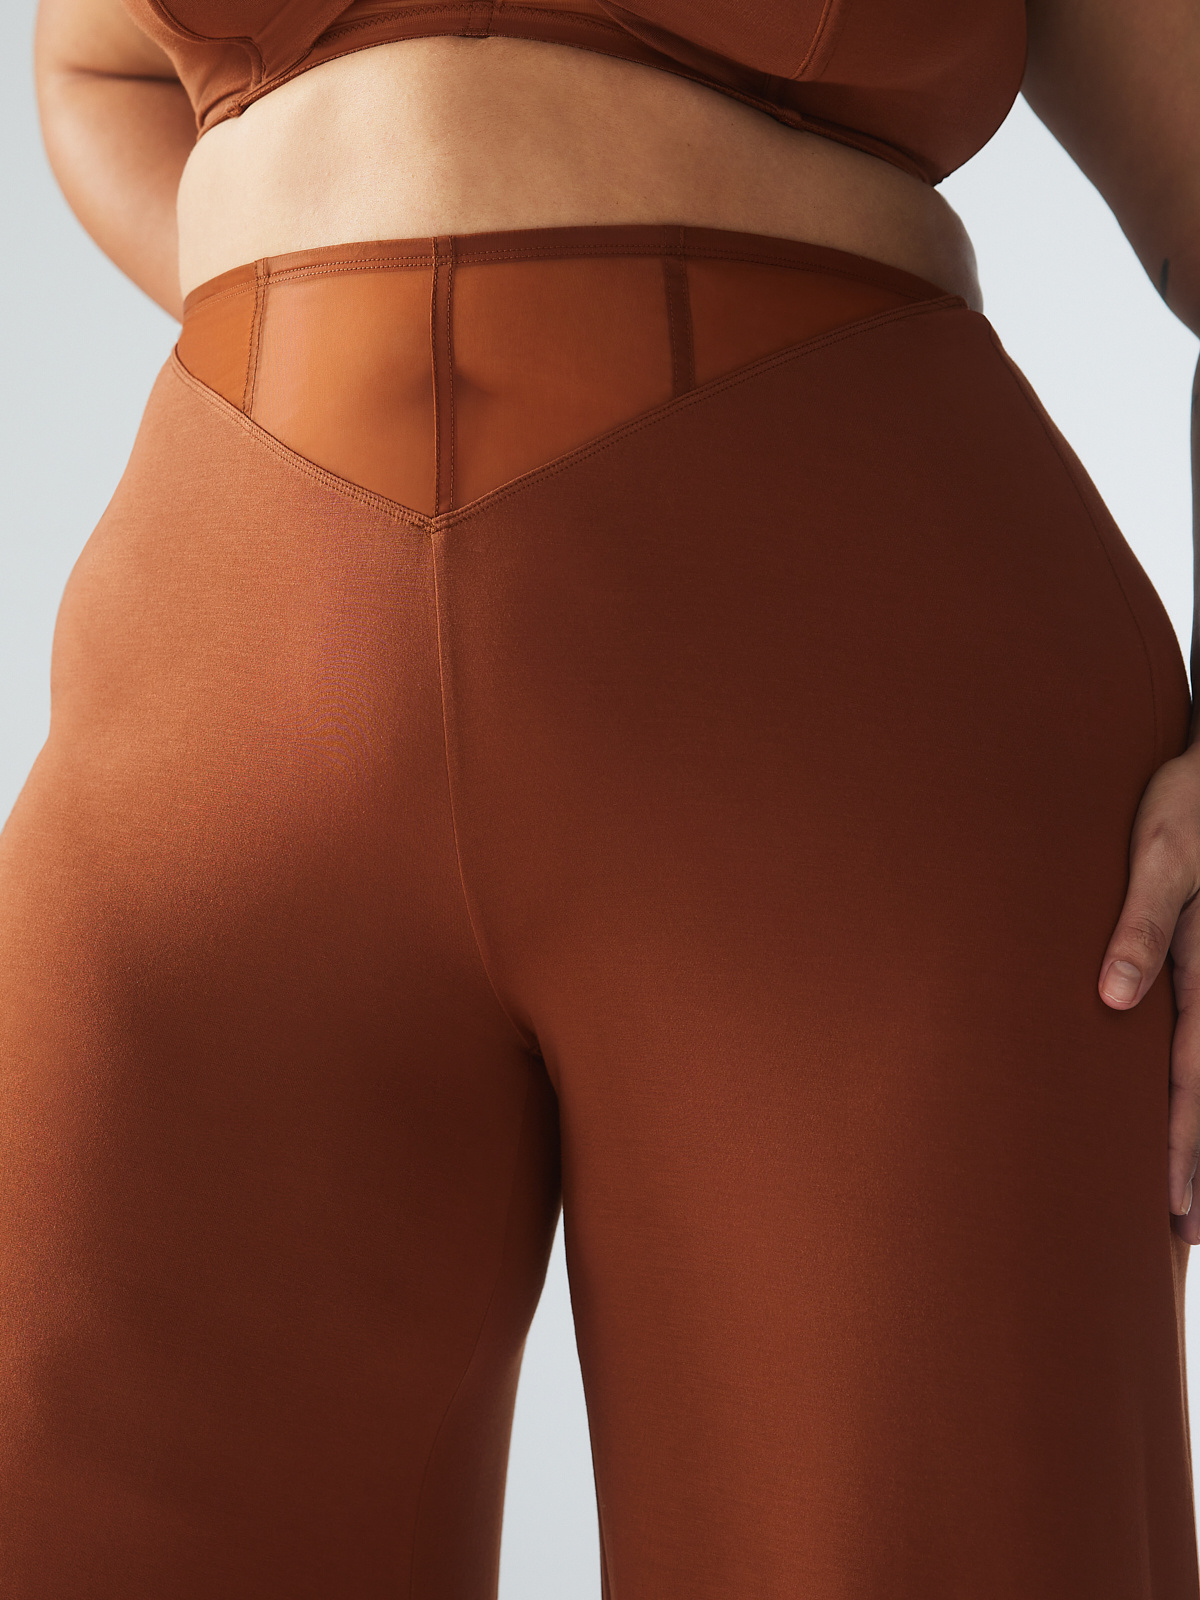 9030 # New Sexy High Waist Perforated Summer Open Hip Hot Pants